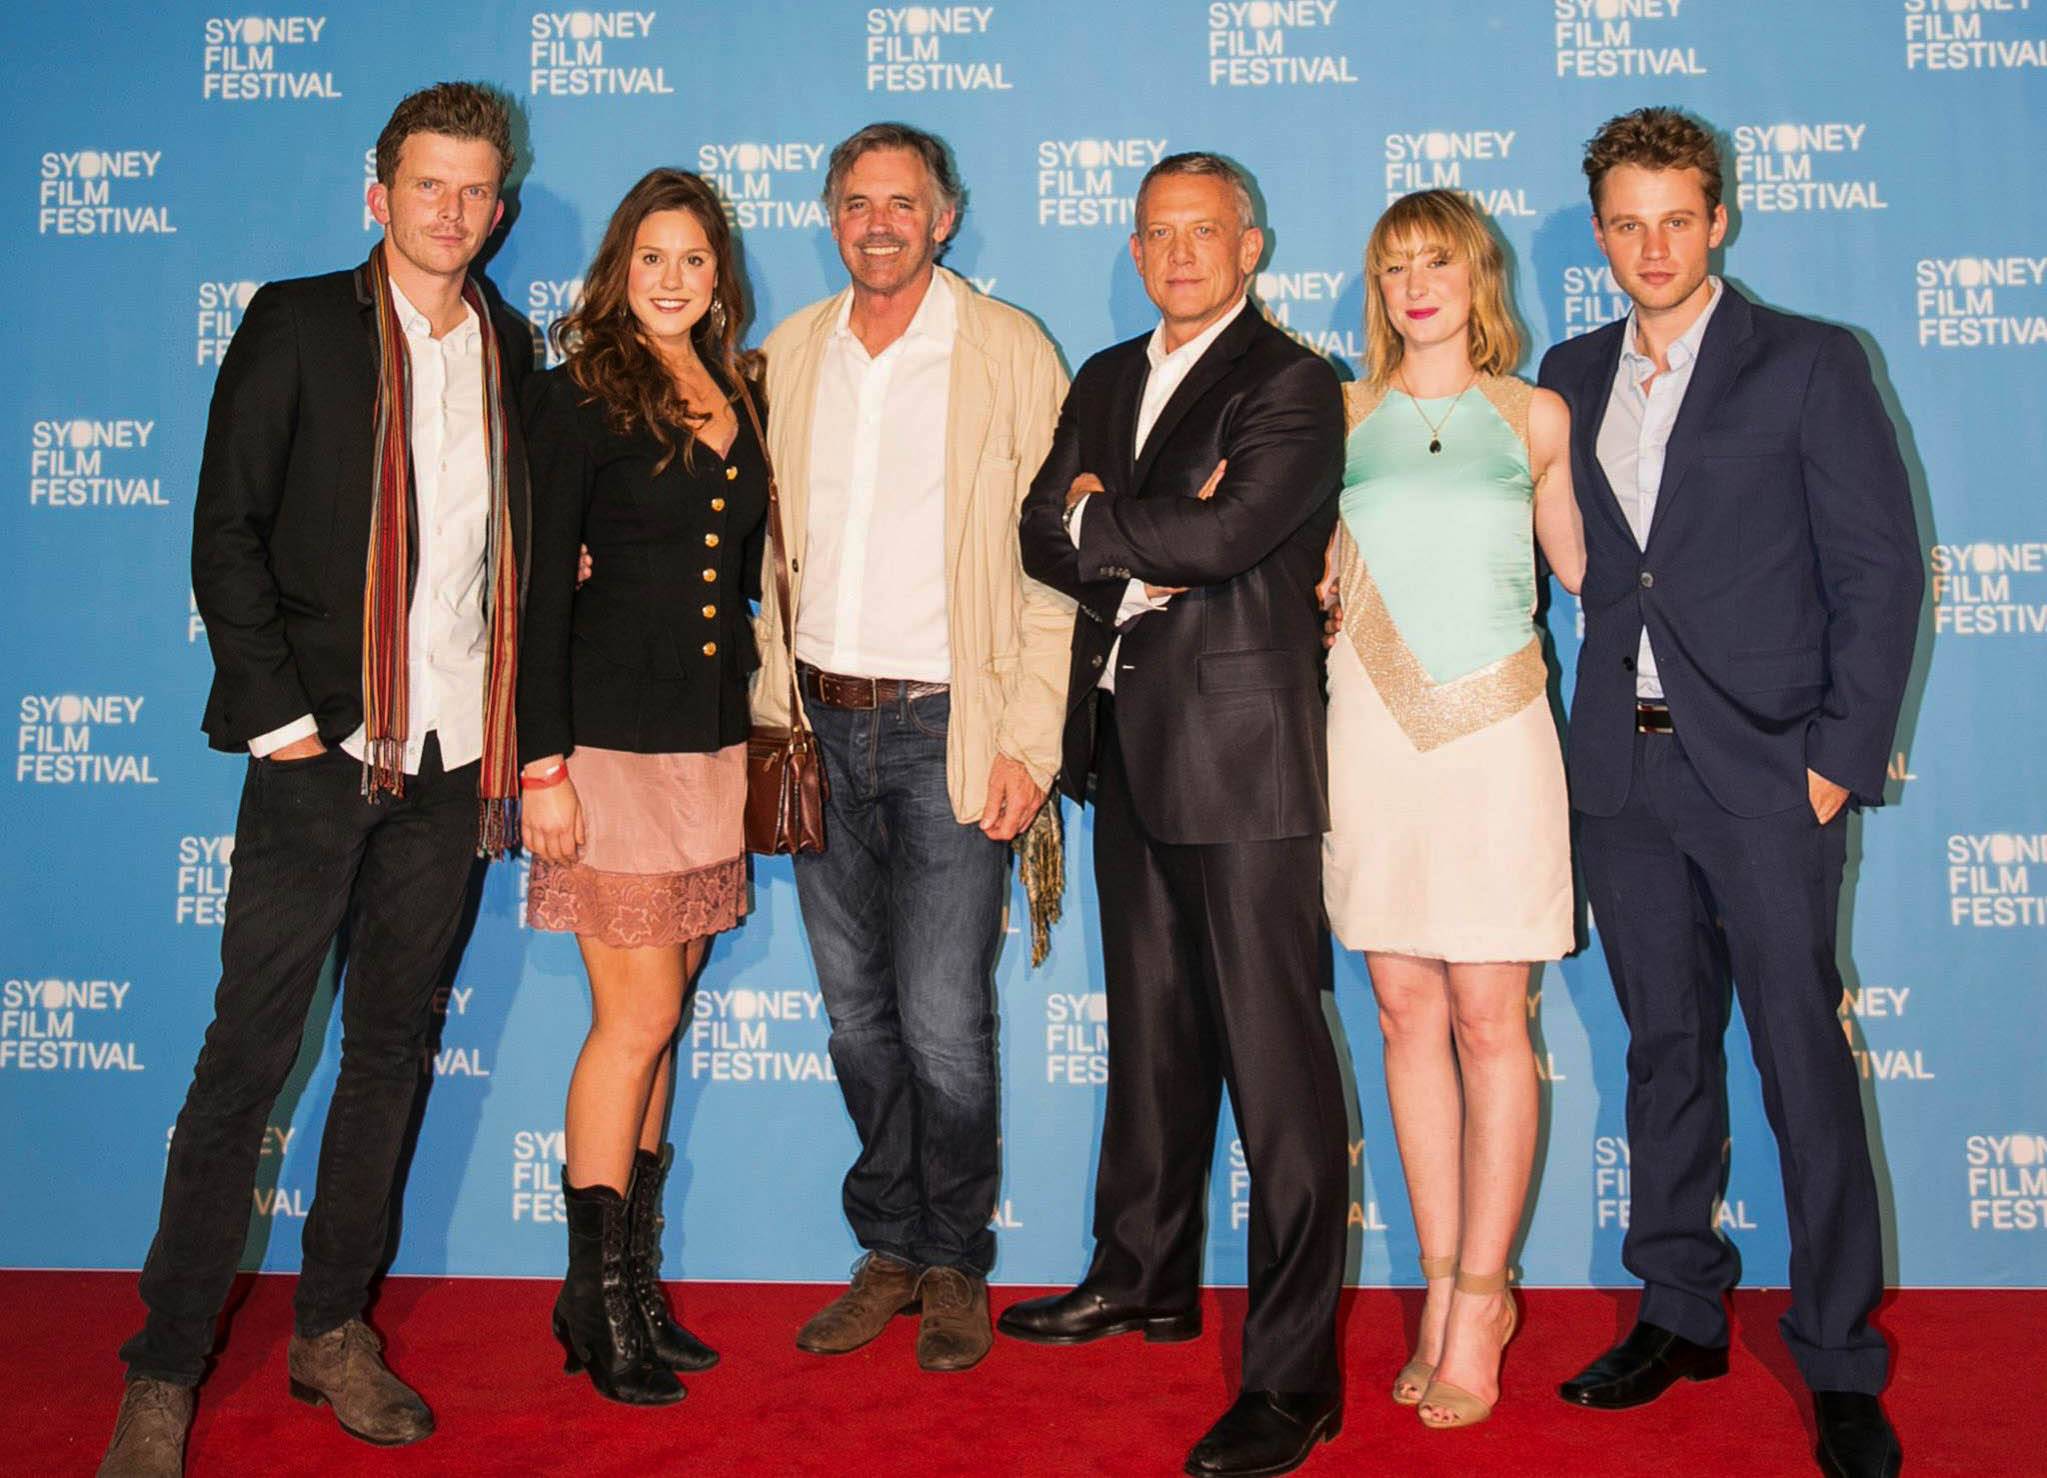 Sydney Film Festival 2014 Devil's Playground Cast